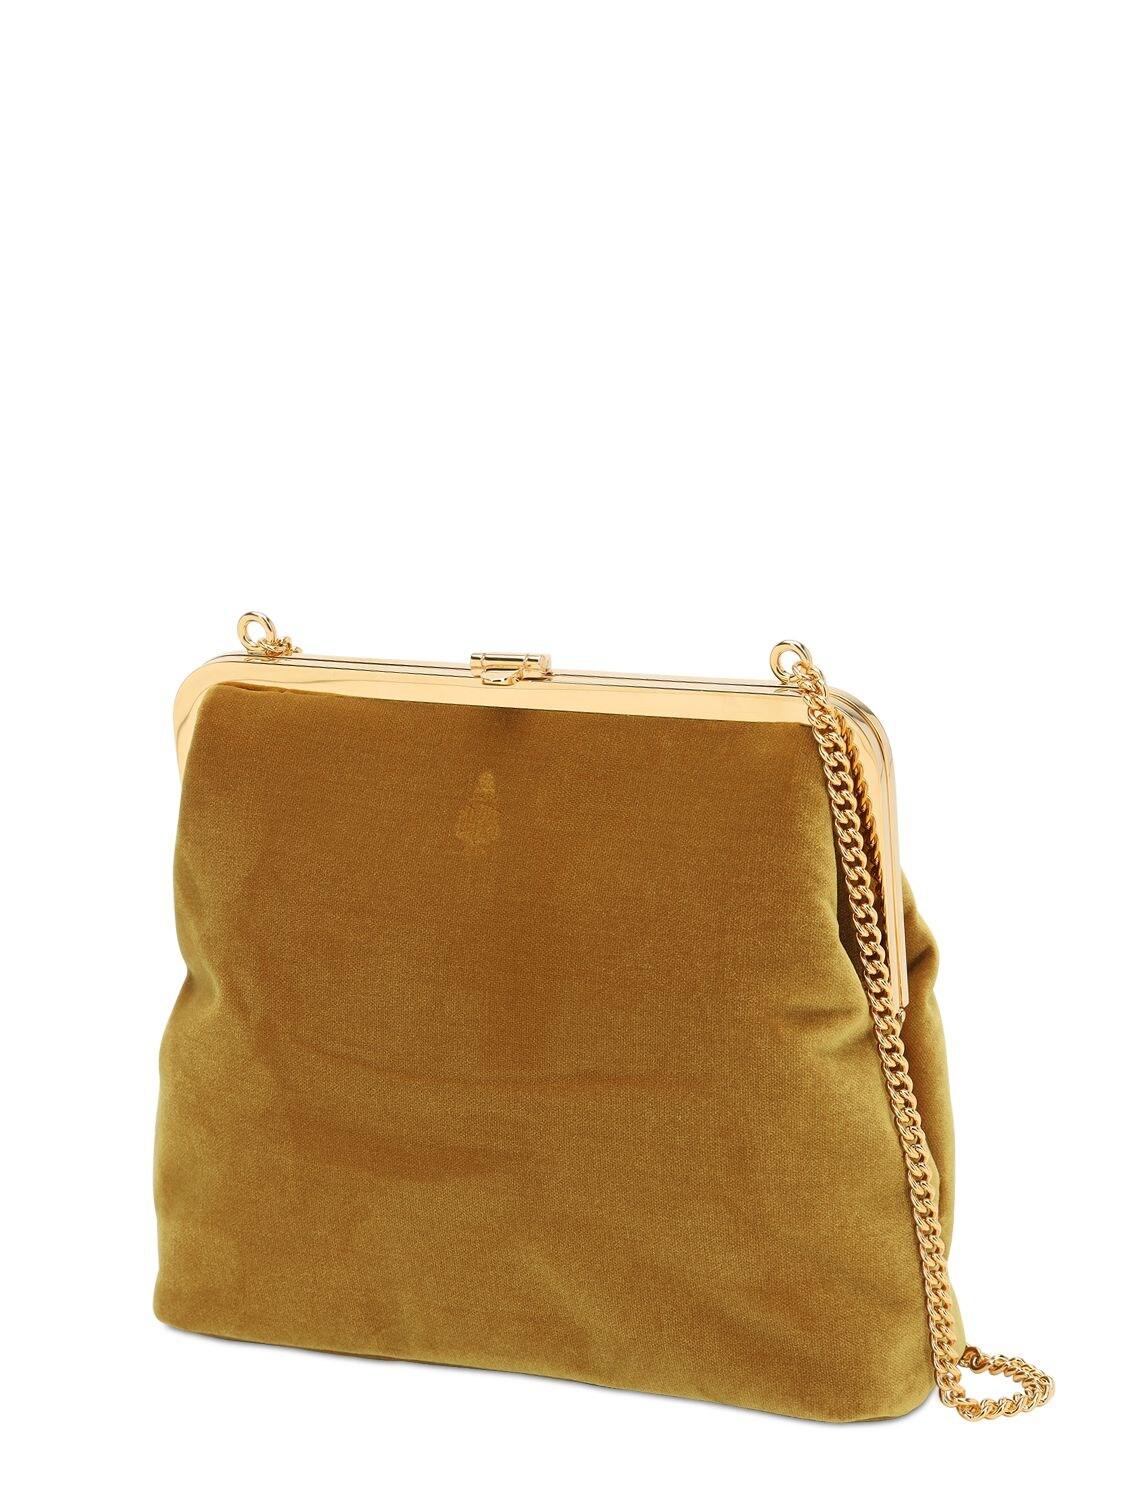 Mark Cross Susanna Shoulder Bag in Gold (Metallic) - Lyst